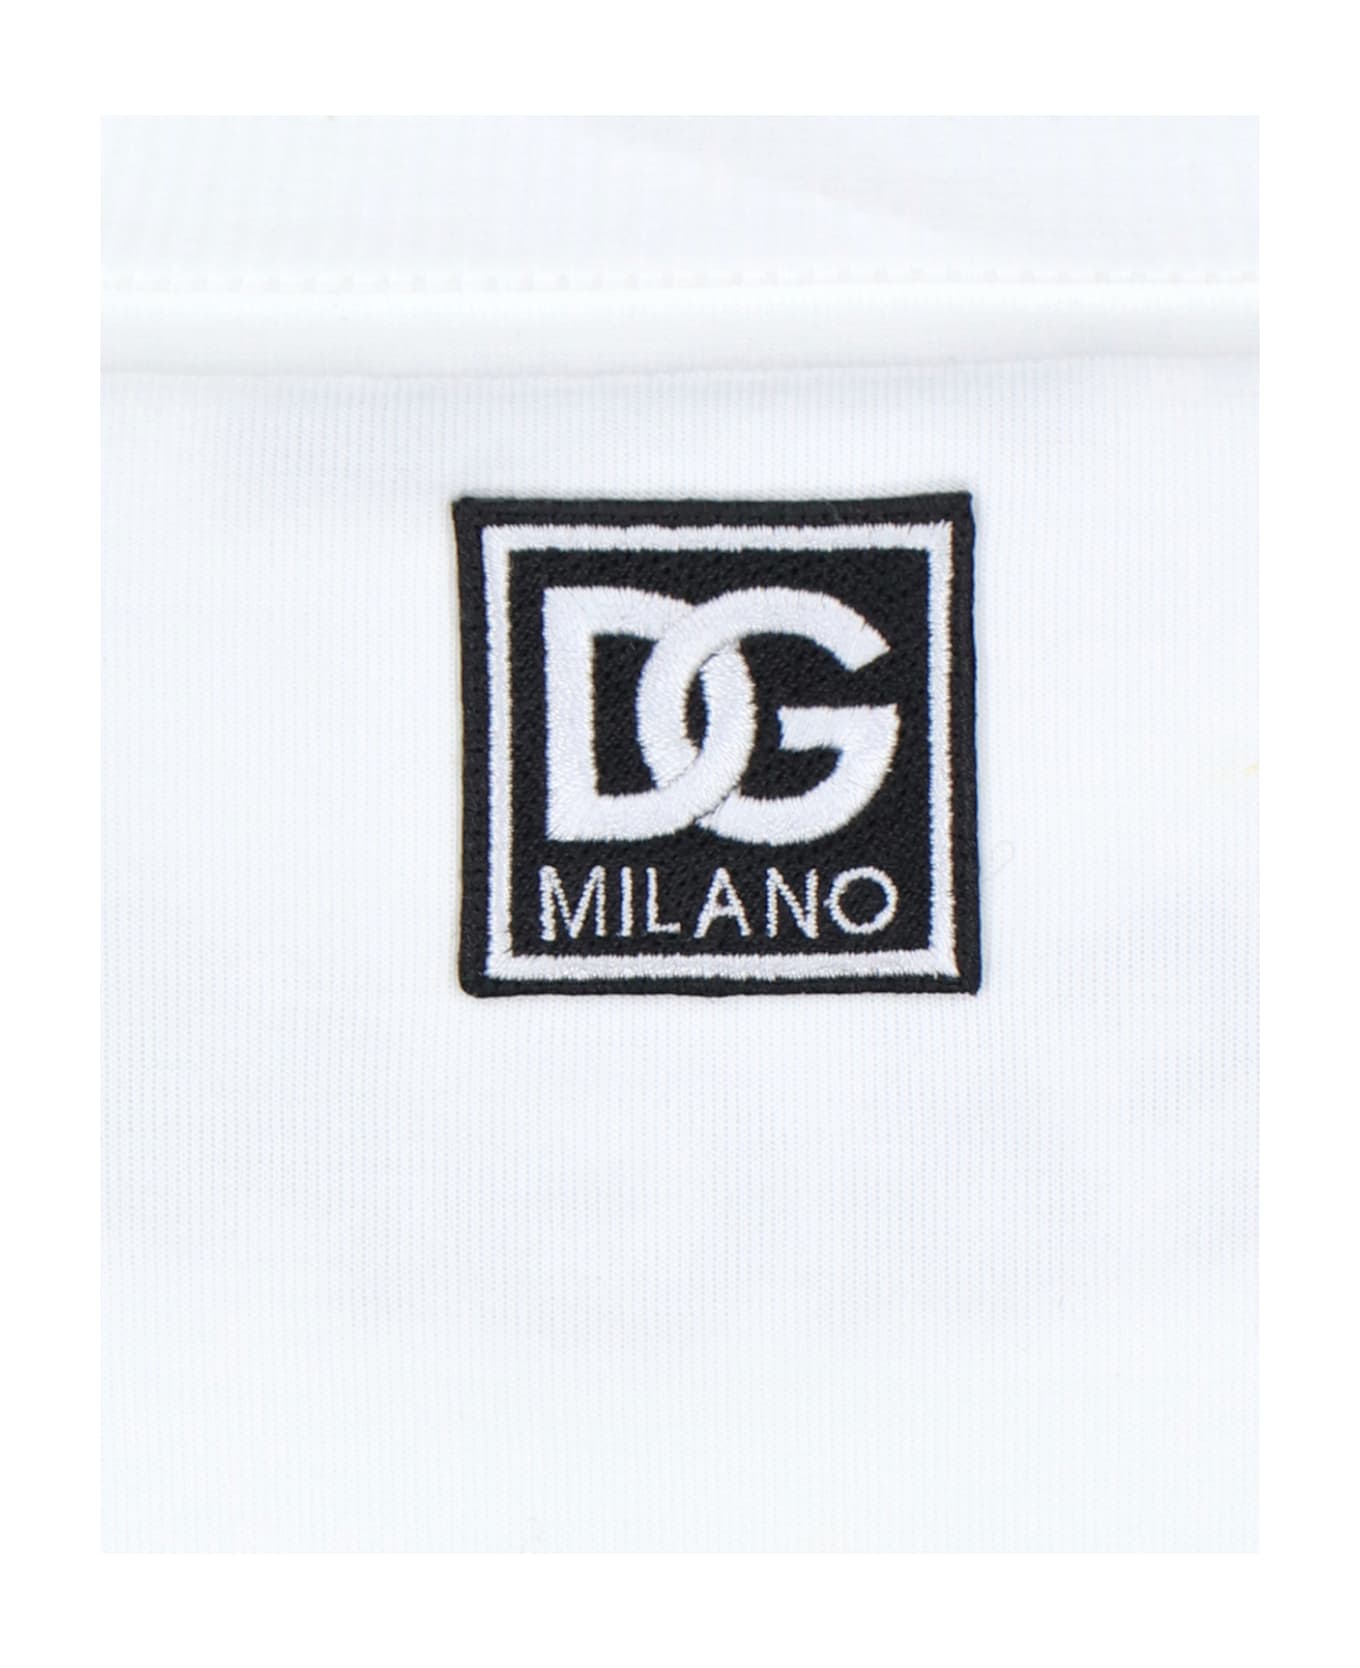 Dolce & Gabbana Sweatshirt With Logo - White フリース